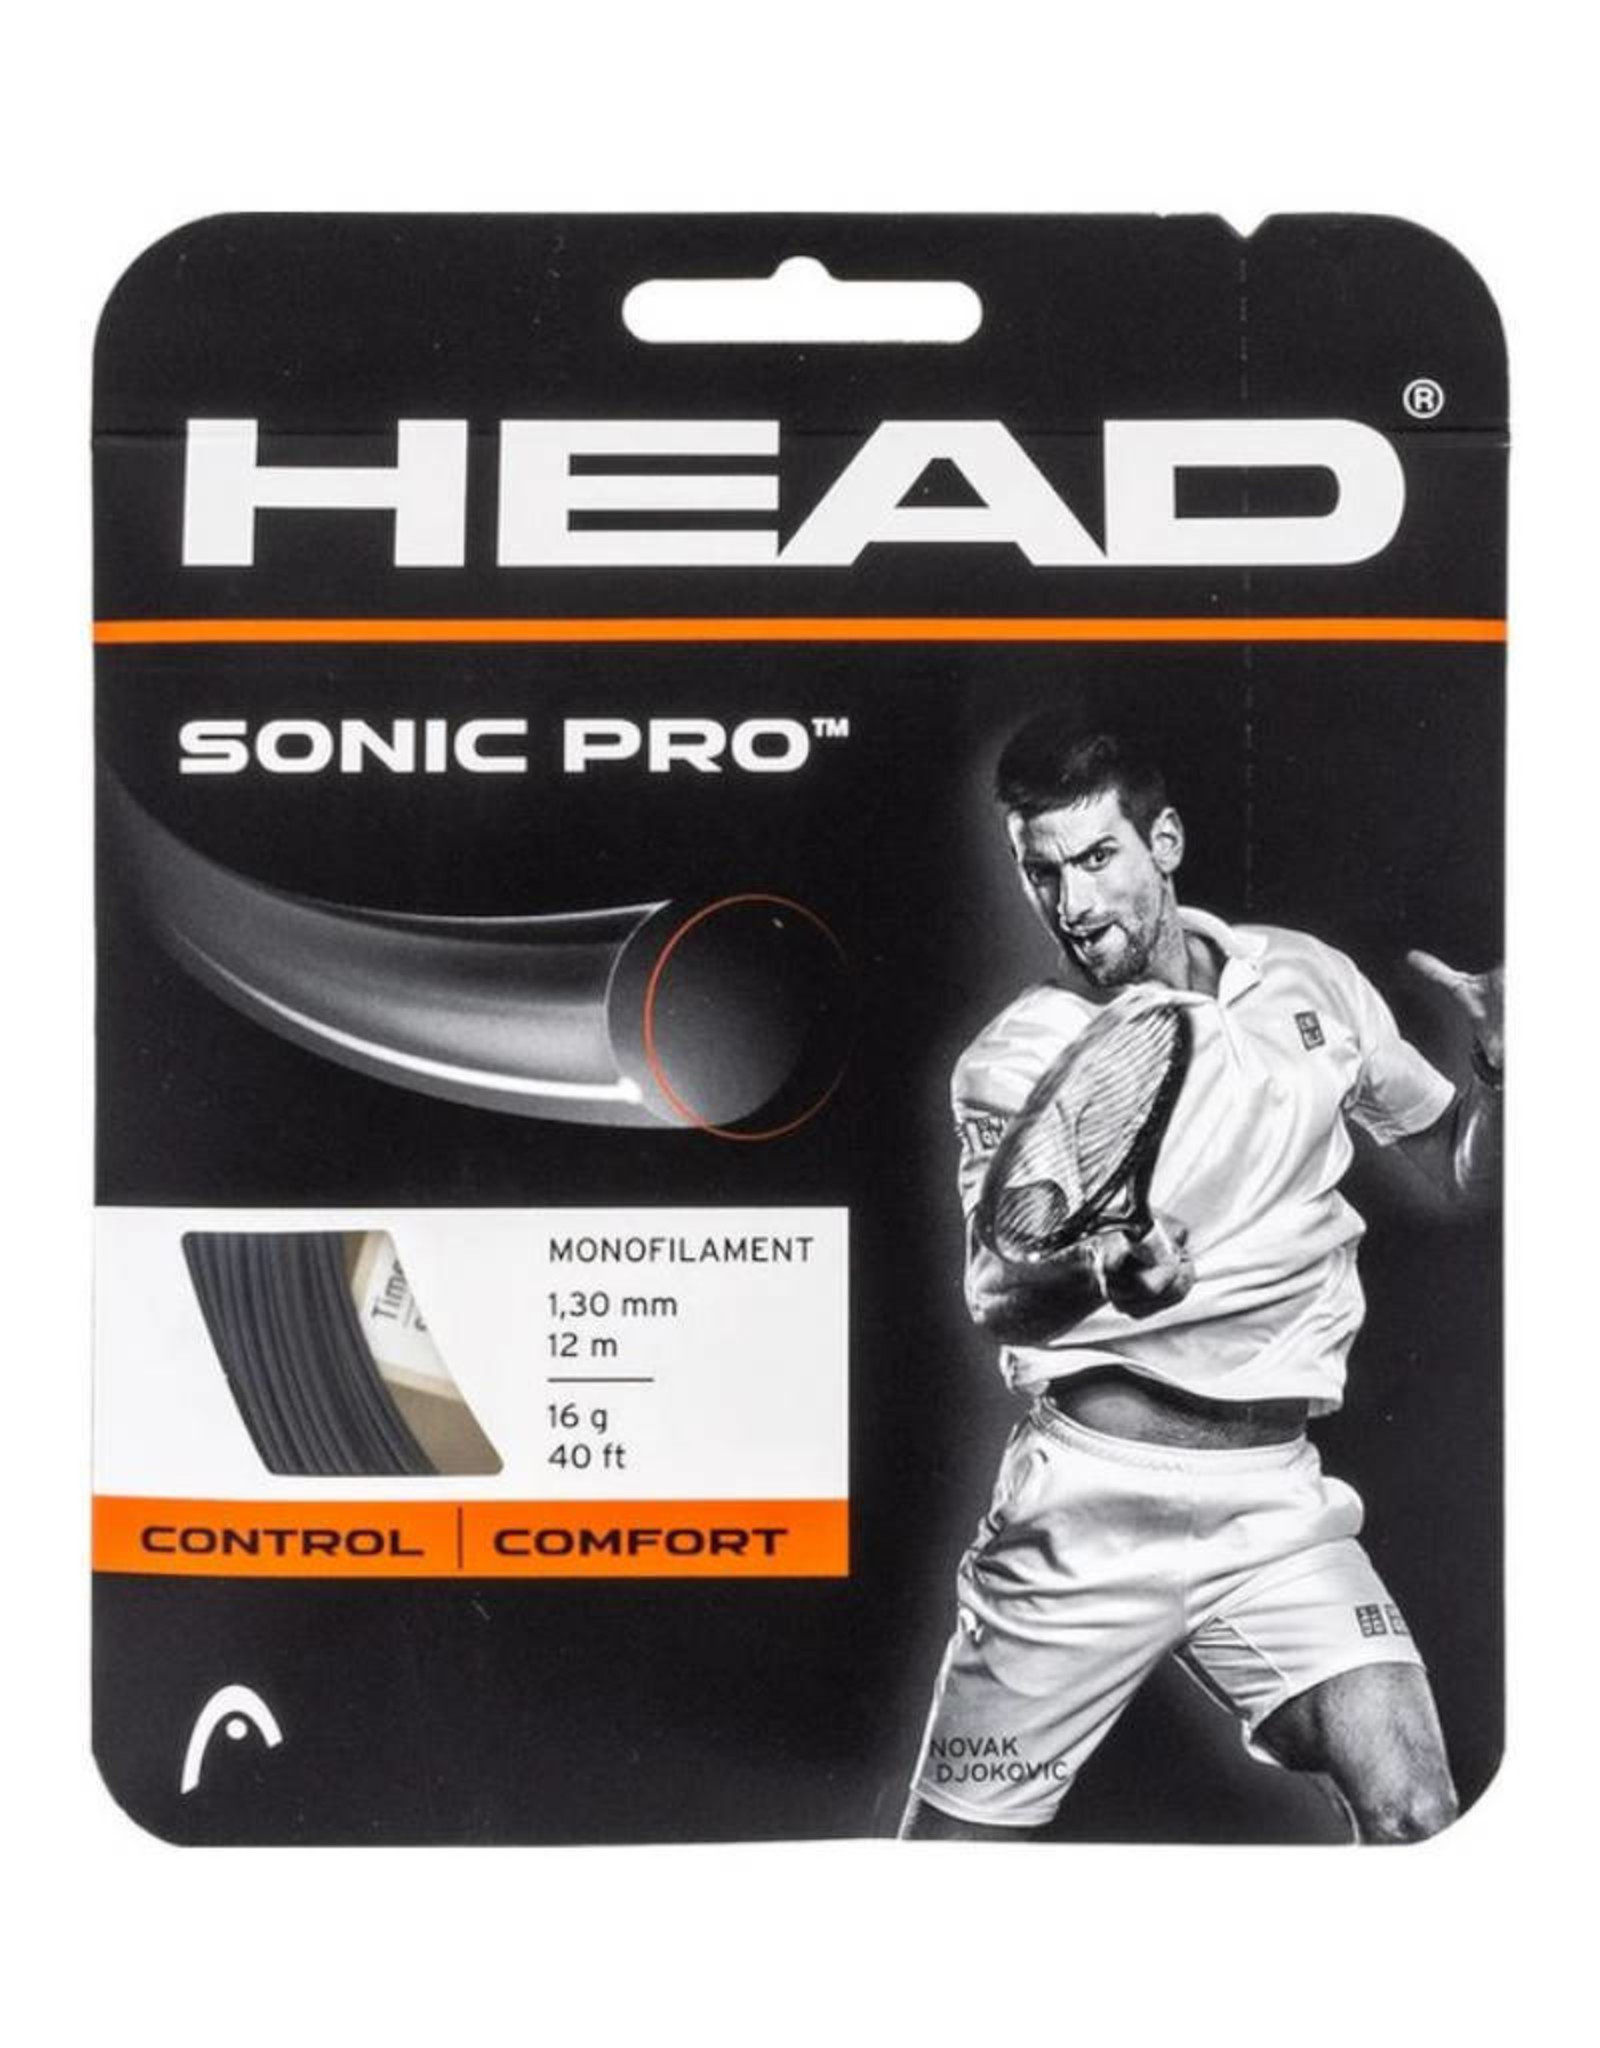 HEAD SONIC PRO 16 FULL SET